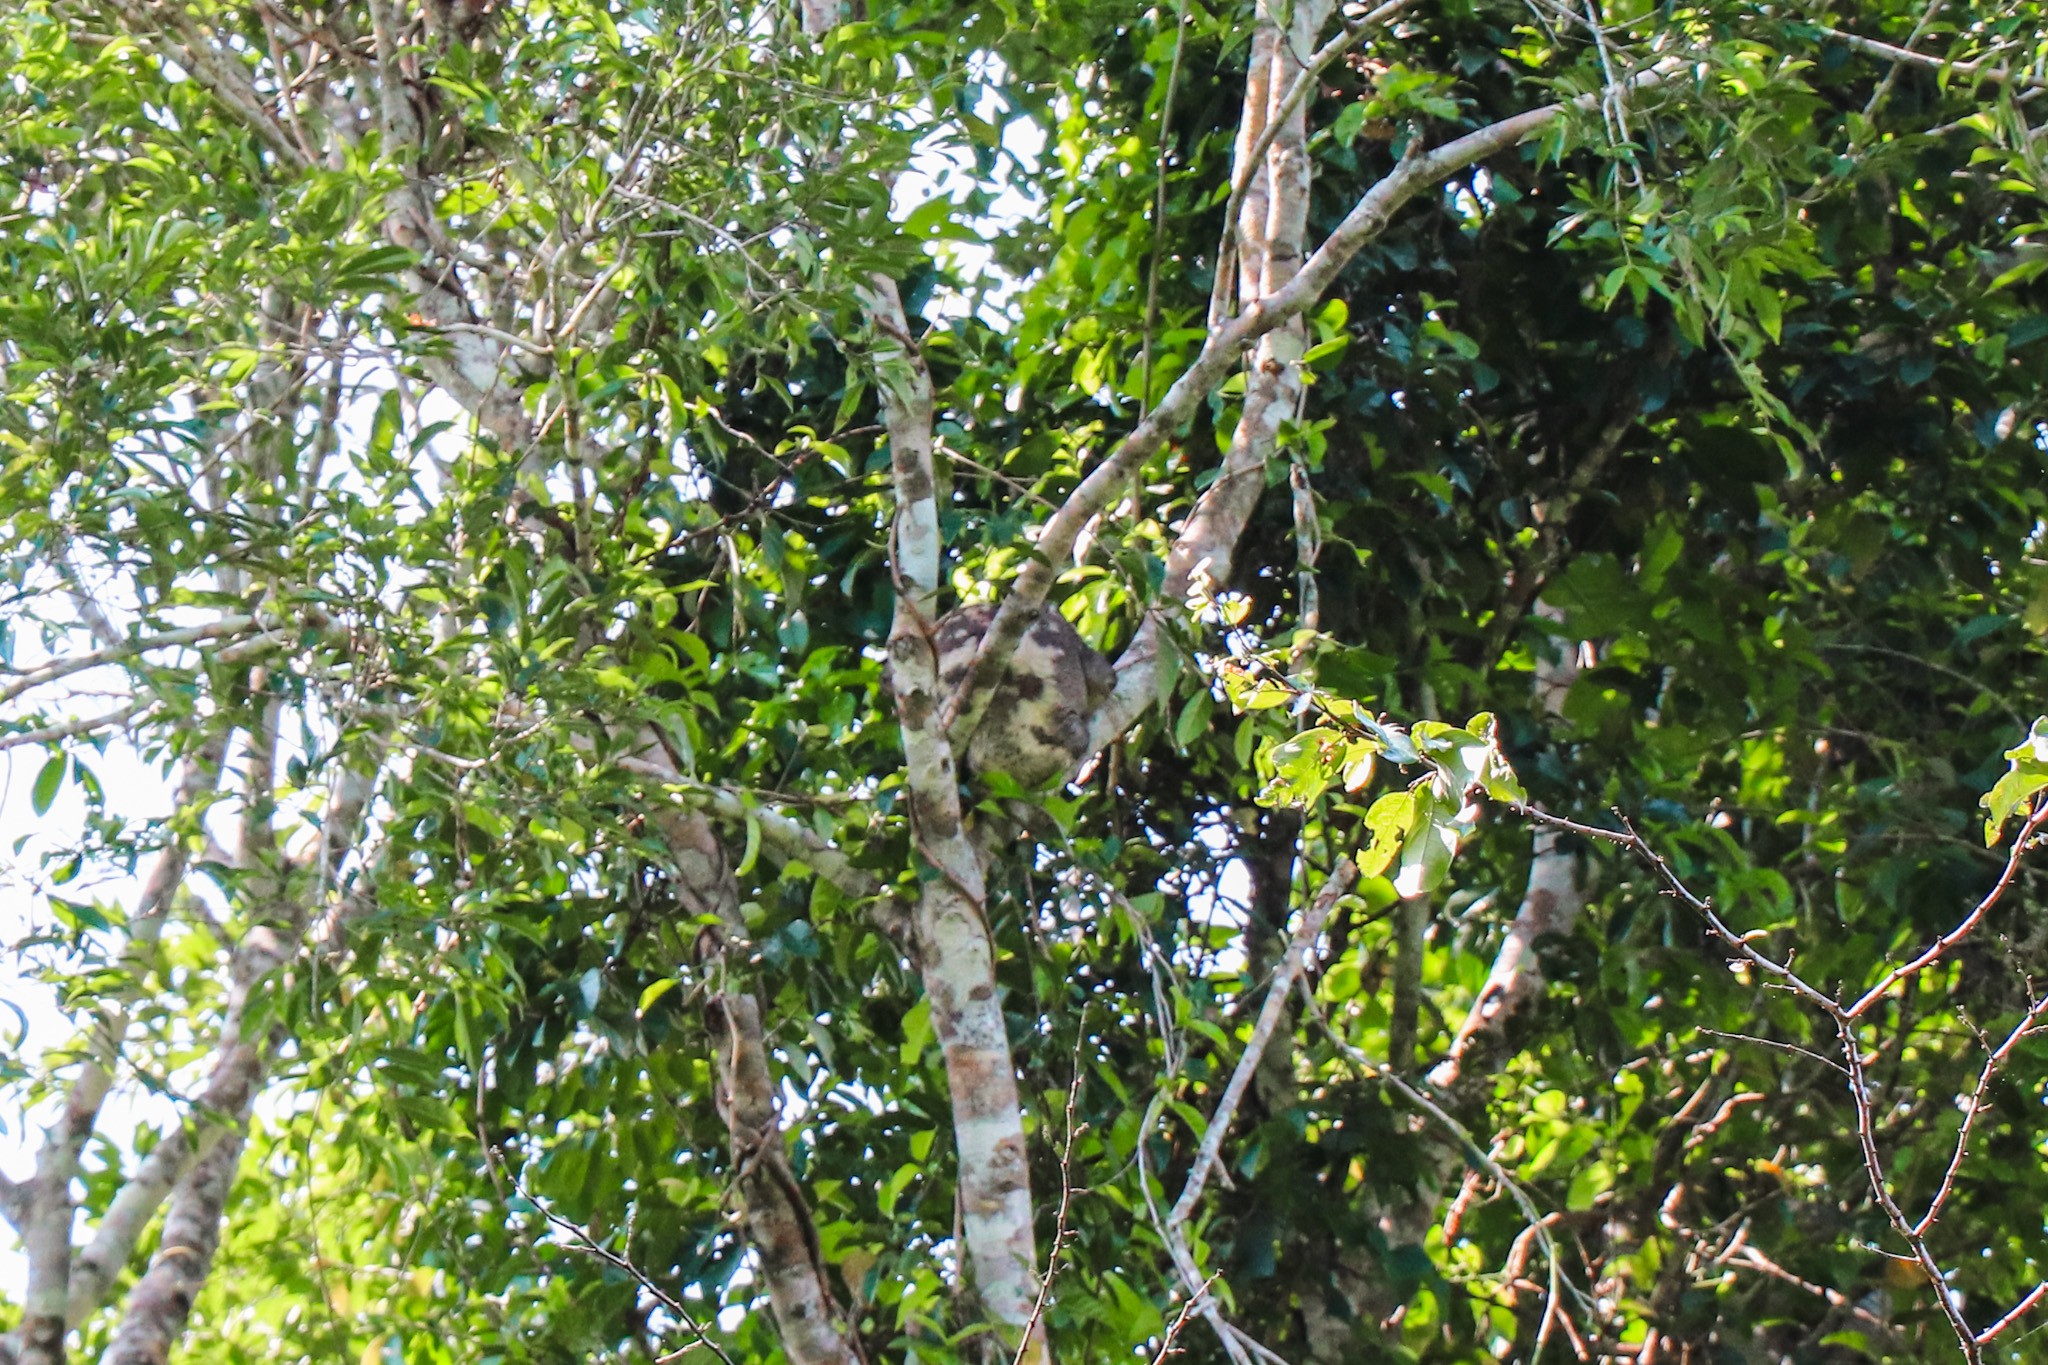 The Amazon Rainforest Adventure: Sloth